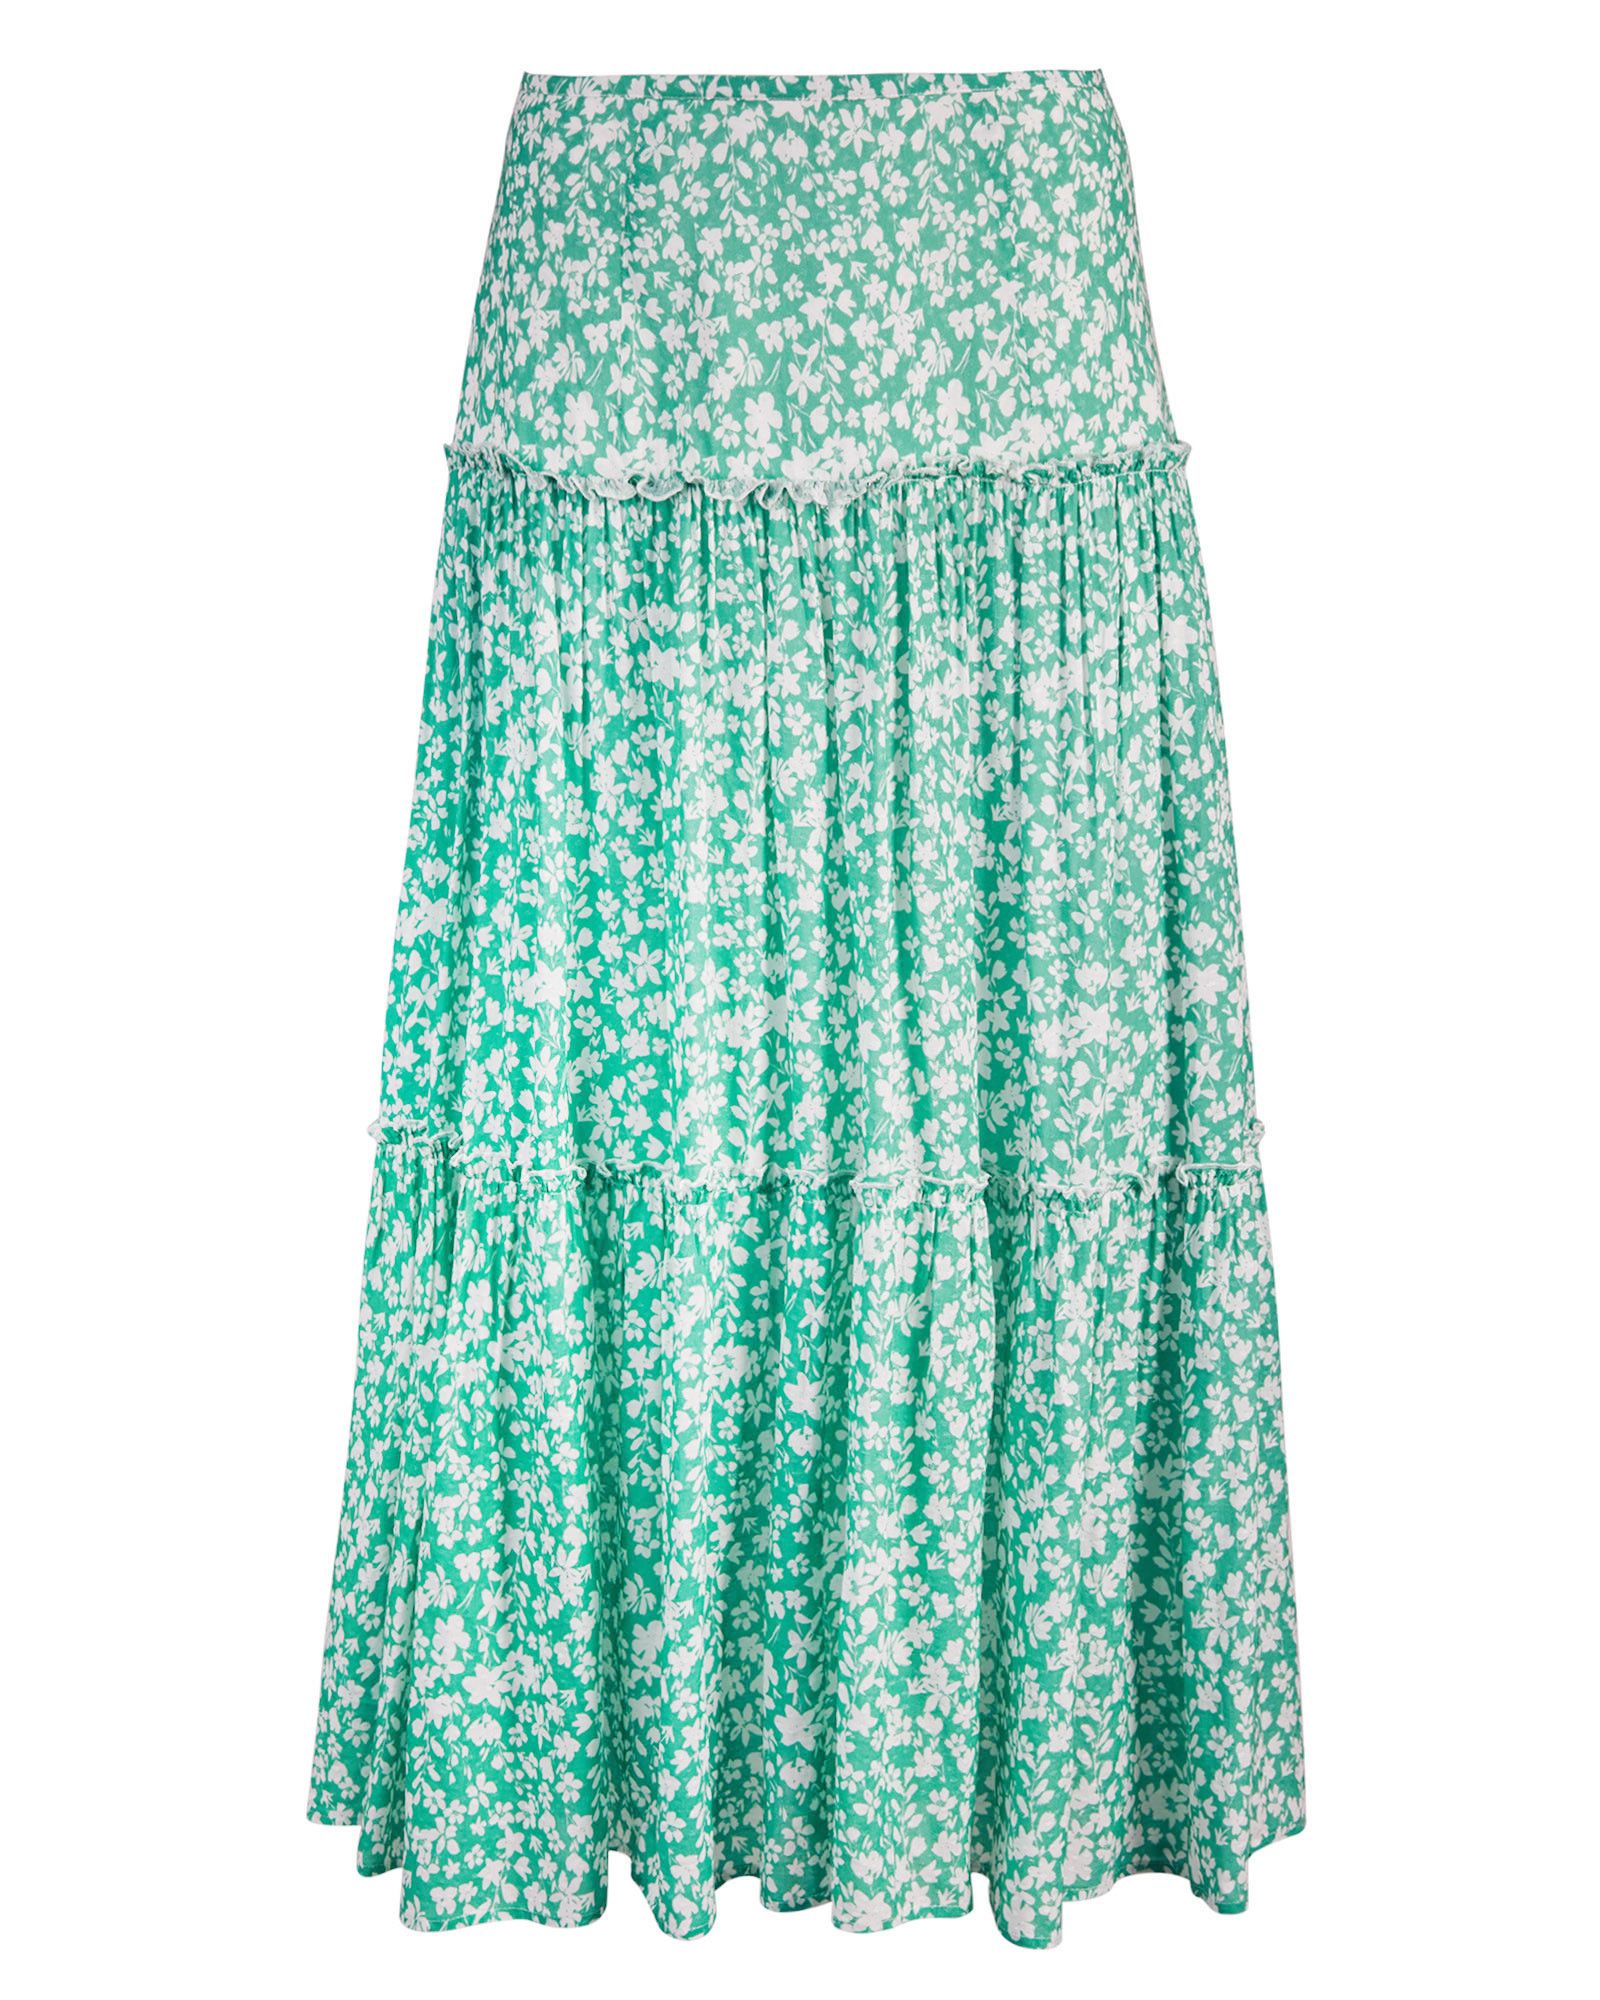 Two Tone Bloom Green Floral Print Midi Skirt | Oliver Bonas